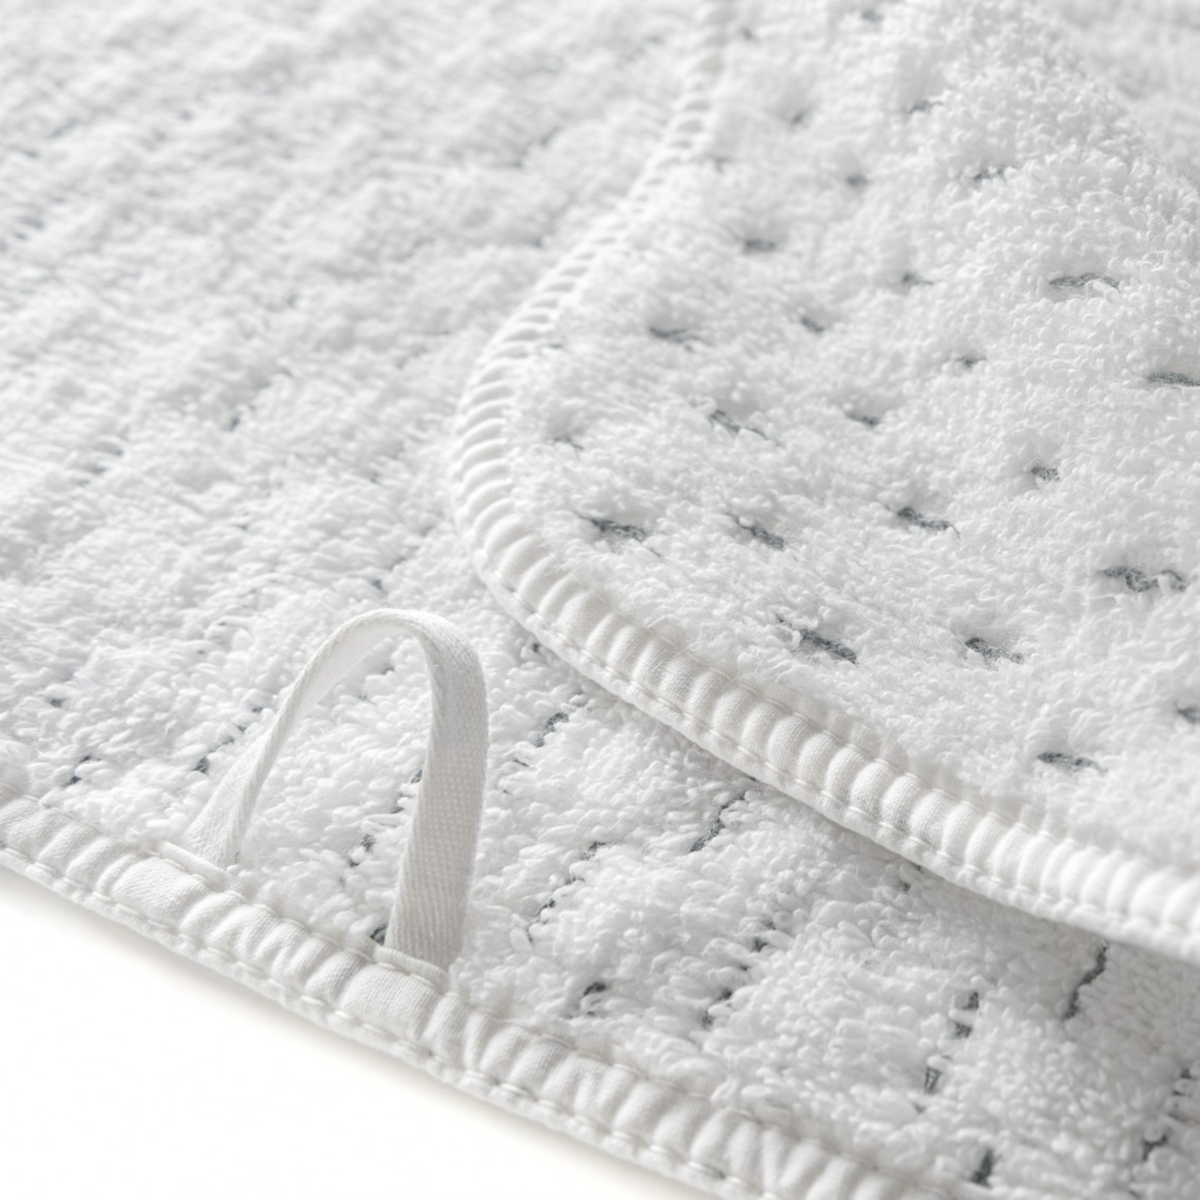 Hanging Loop Detail of White Silver Alice Bath Towels